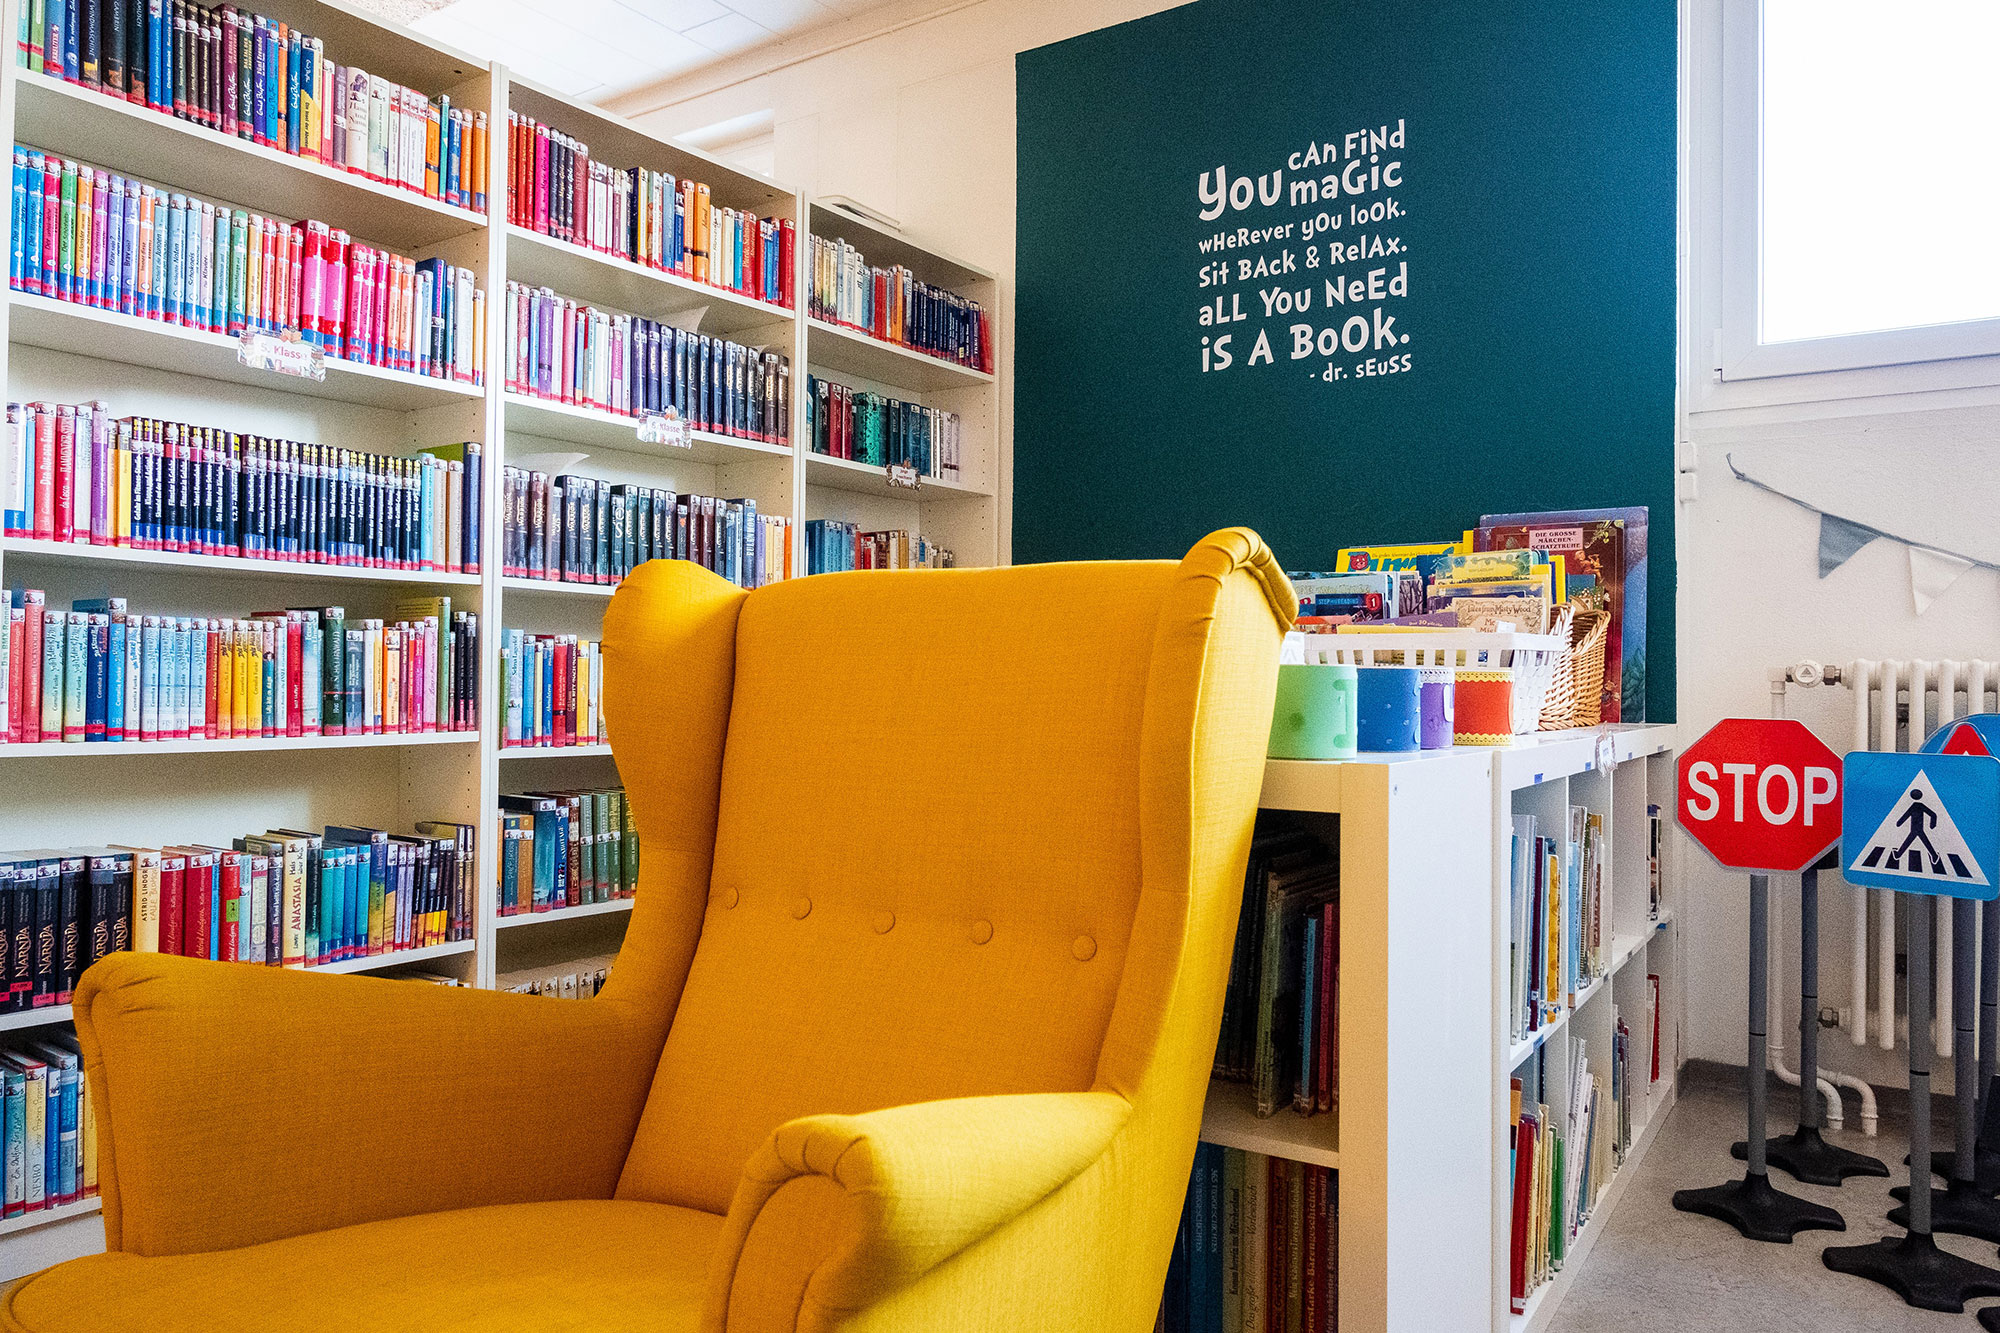 Ein gelber Sessel steht in der farbigen Bibliothek und an der Wand steht der Spruch "You can find magic wherever you look. Sit back and relax. All you need is a book."	